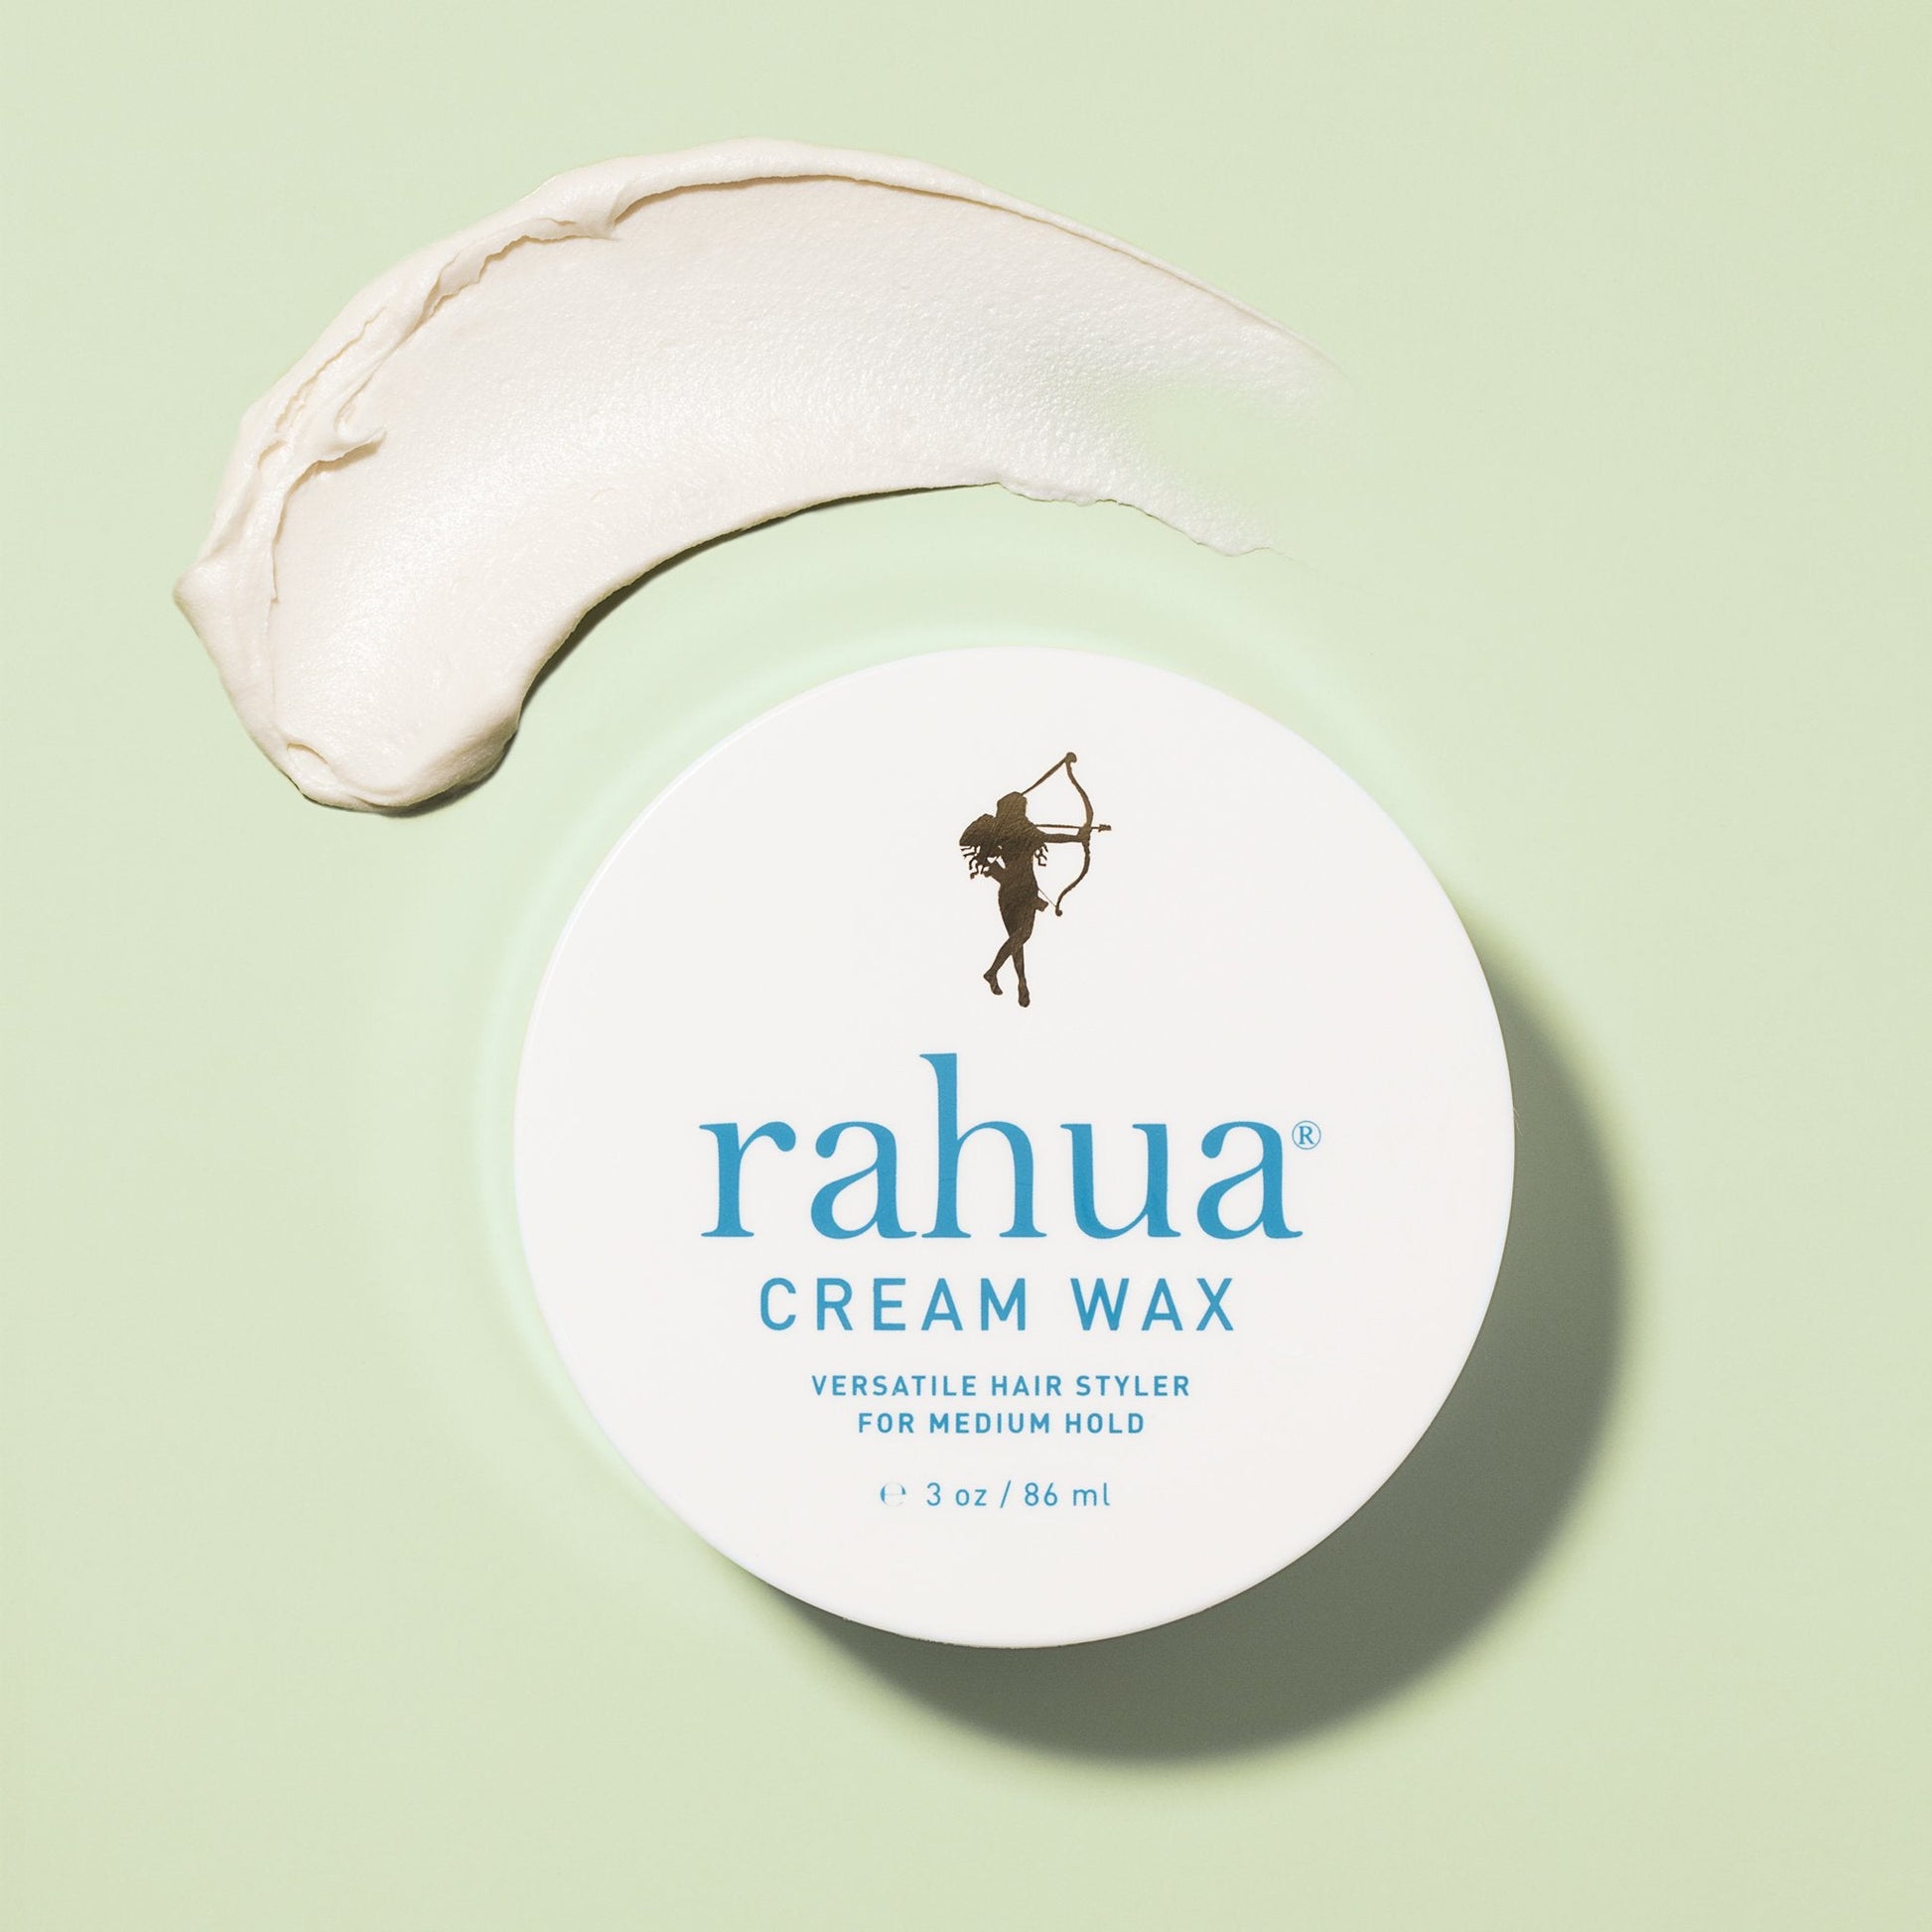 Rahua Cream Wax open Bottle/Jar with Around Plants Leaves